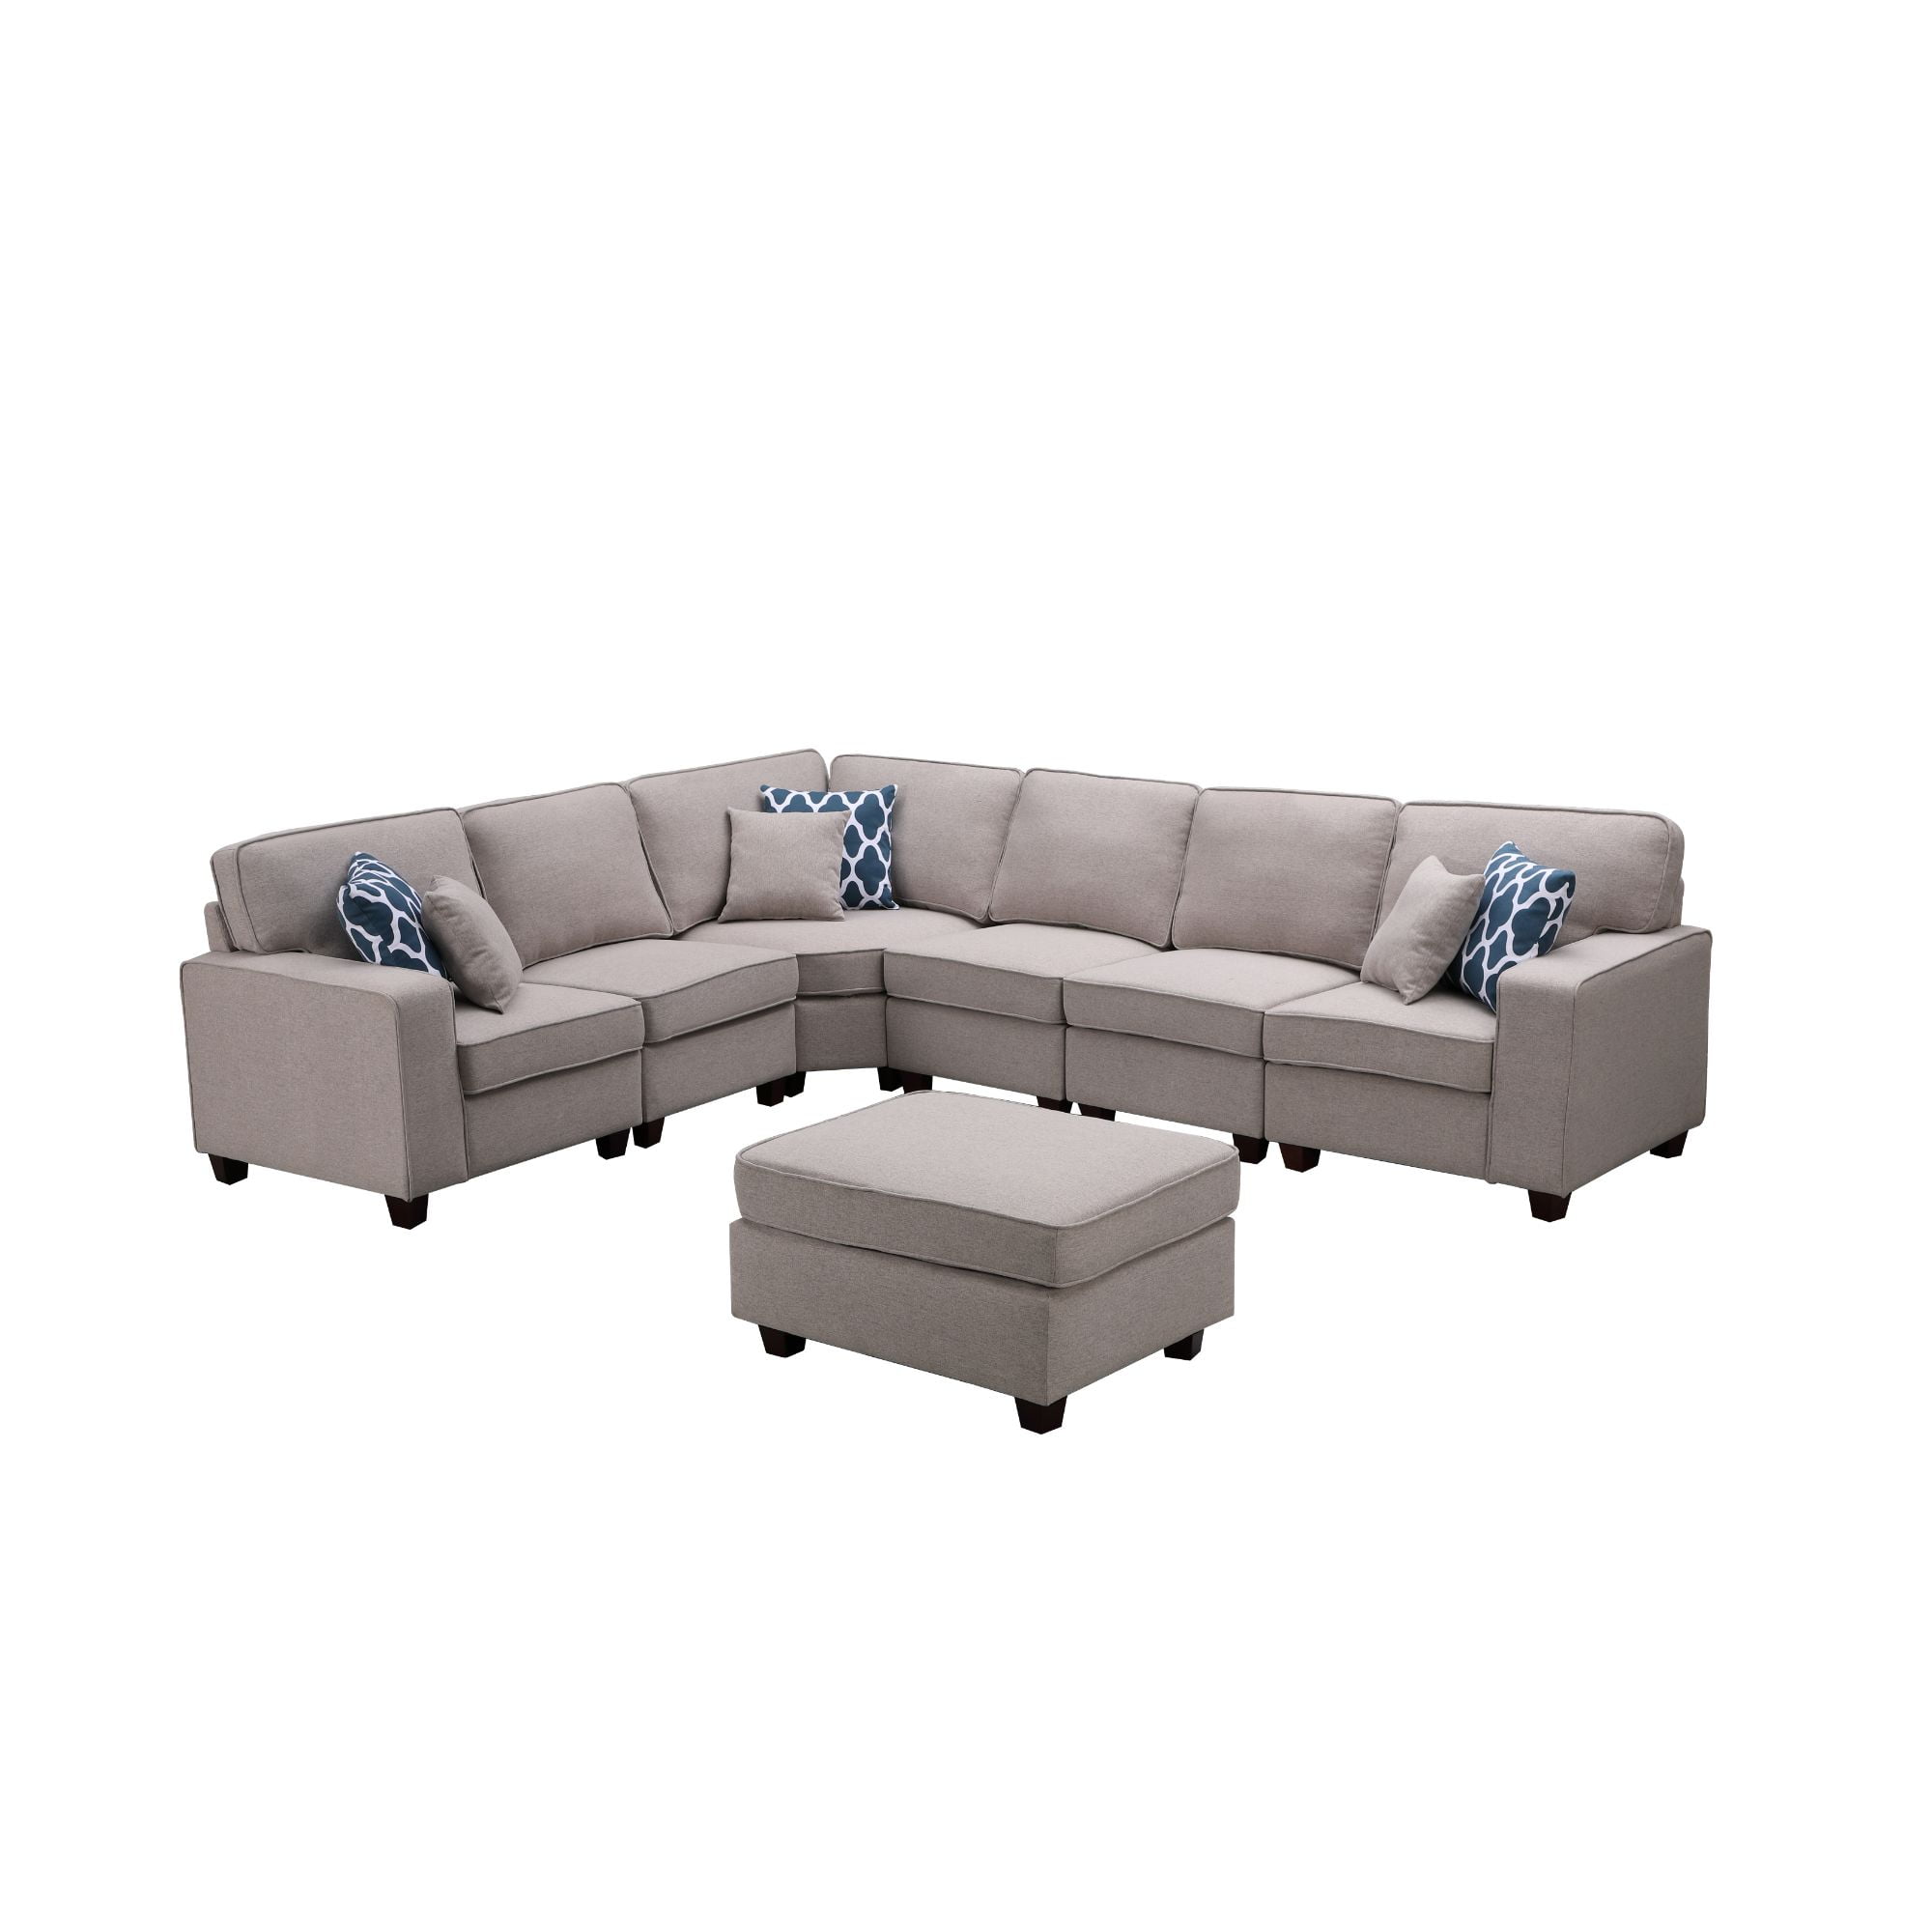 aanwijzing inval partner Set of 7 Thunder Gray Casanova Modular L-Shape Sectional Sofa with Ottoman,  10.25' - Walmart.com